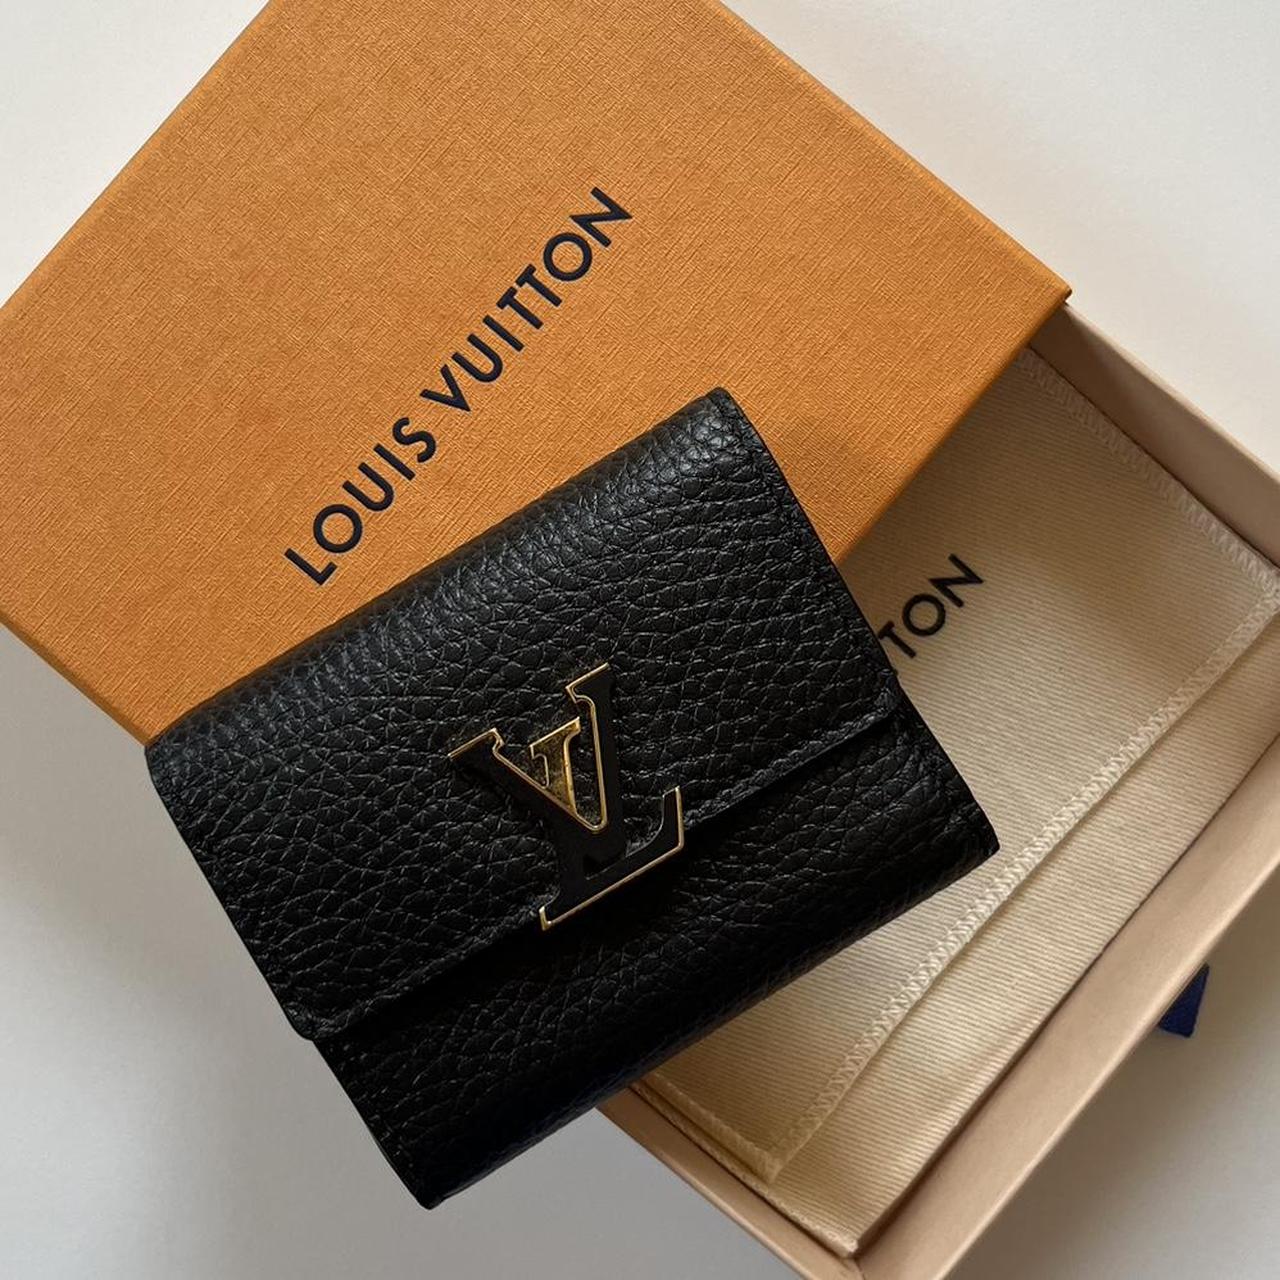 Louis Vuitton Capucines XS Wallet #louisvuitton - Depop